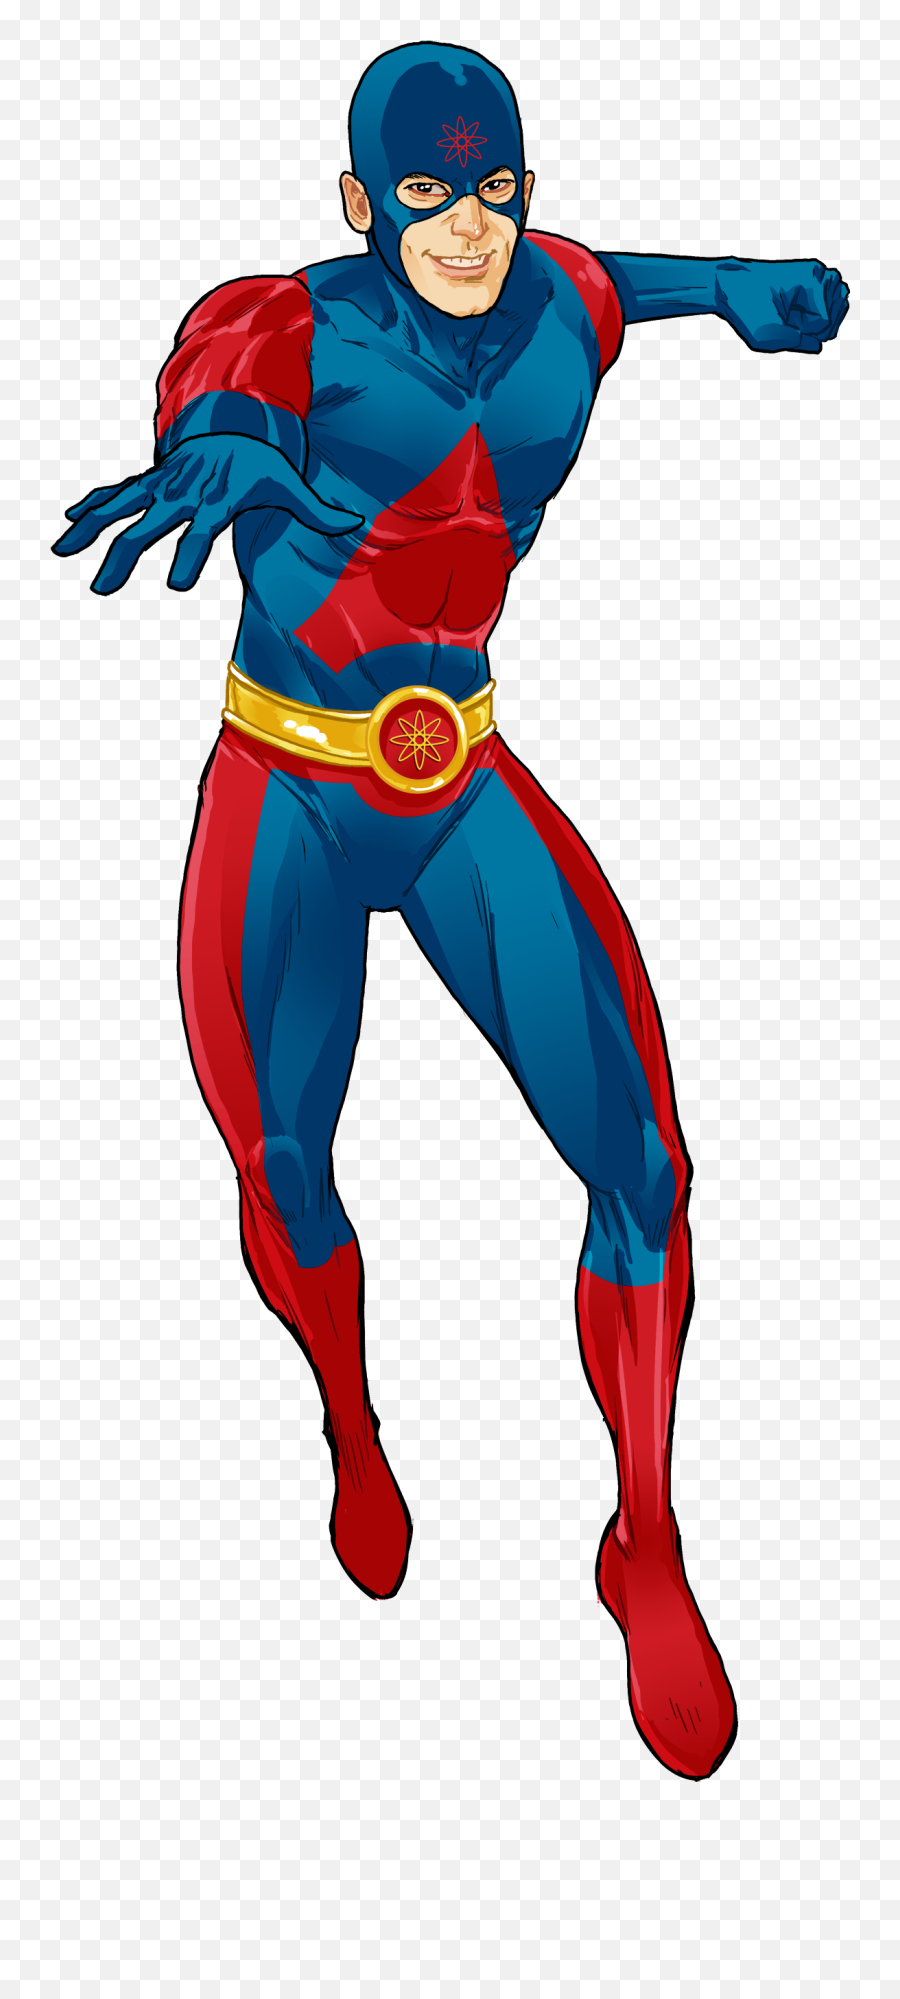 The Power Of Diversity 10 Classic Superheroes Reimagined - Ant Man Vs Atom Emoji,Black Canary Logo